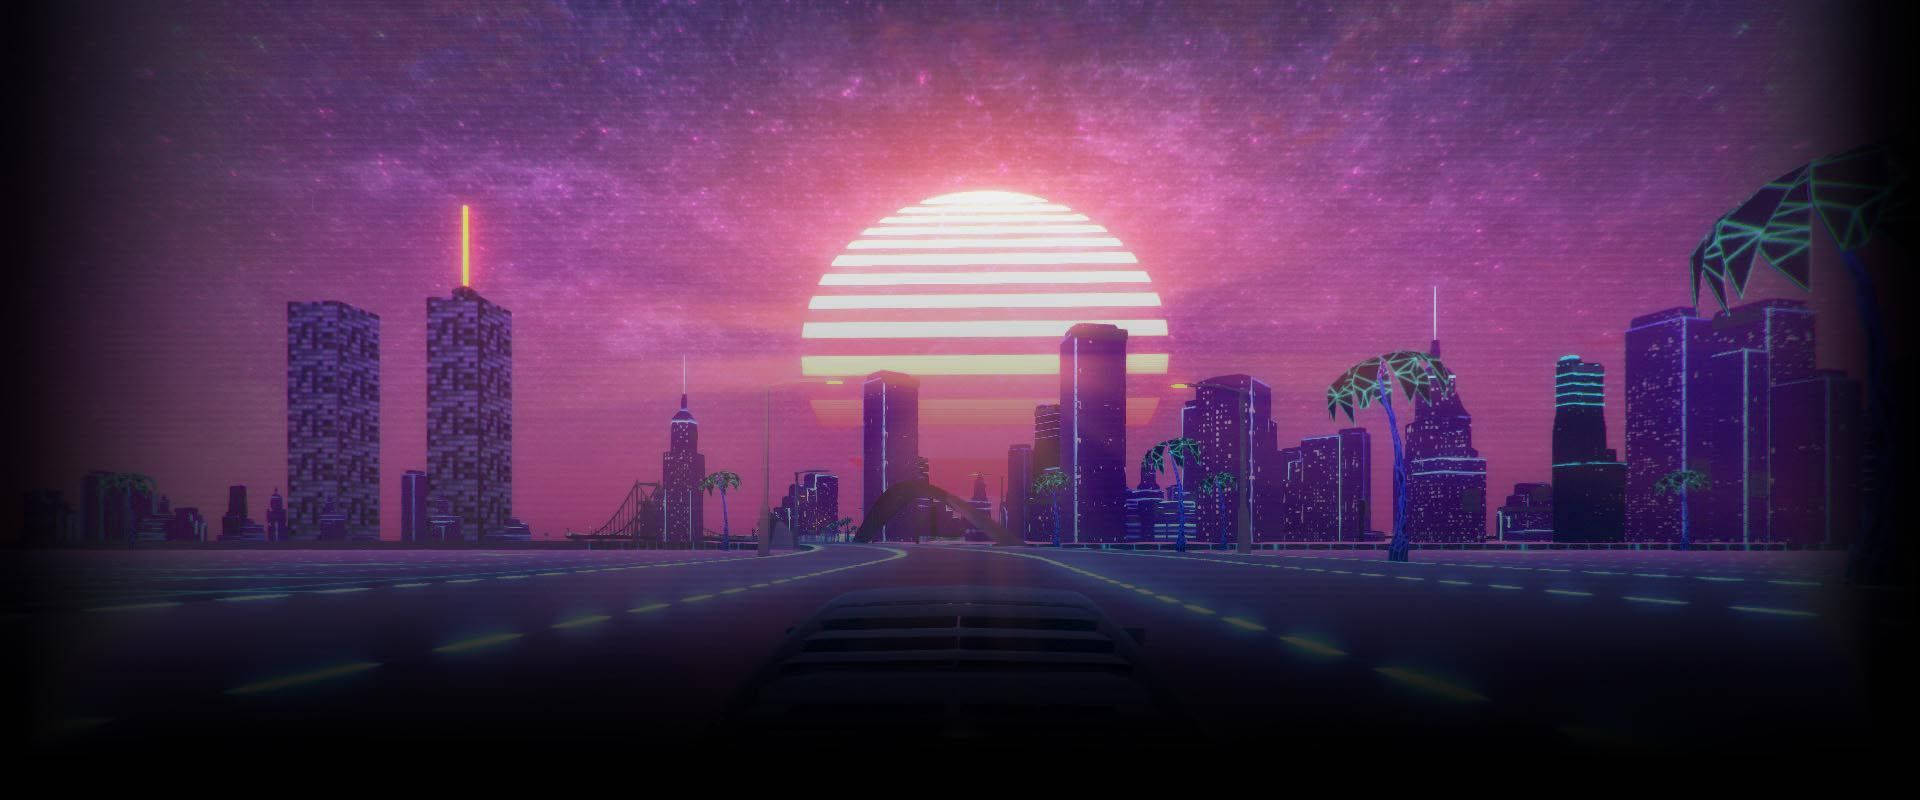 "The City Lights Up in a Vaporwave Sunset" Wallpaper